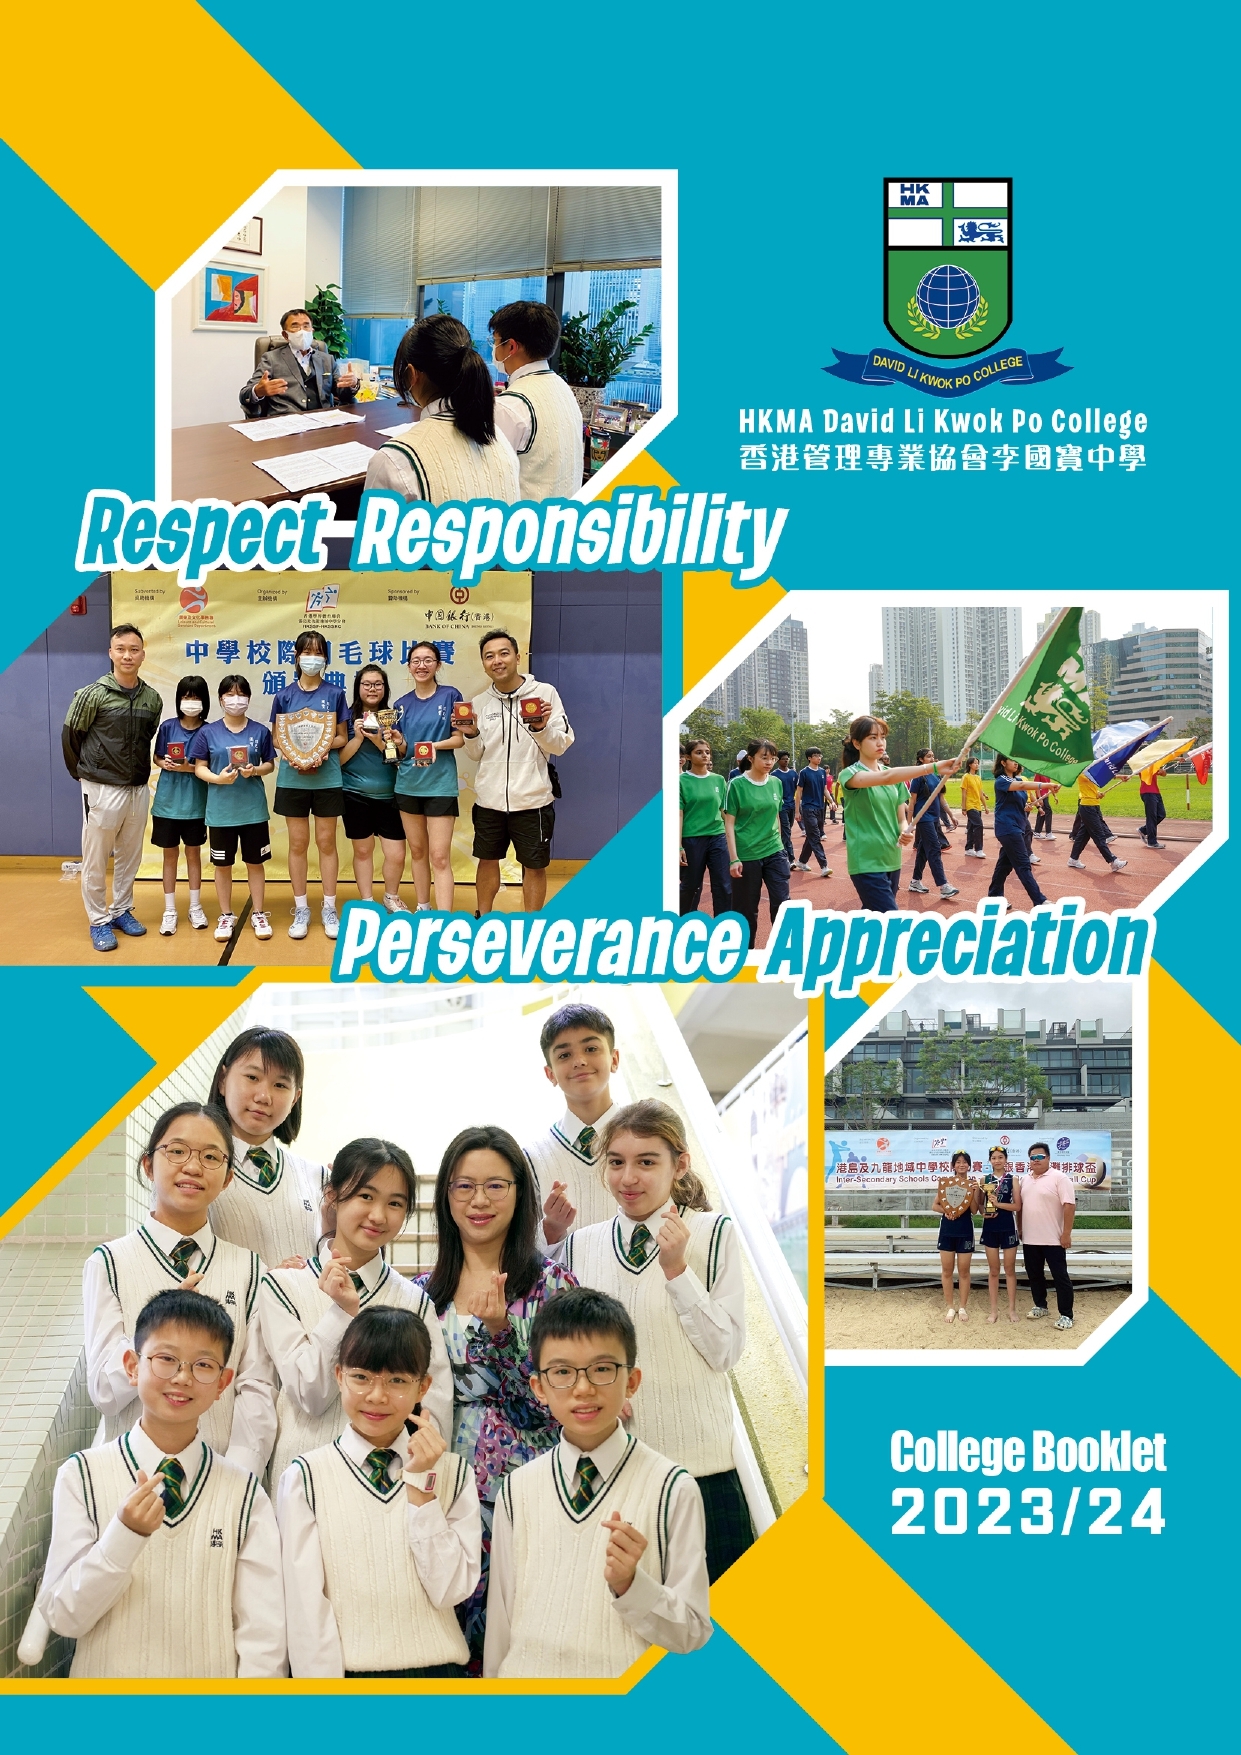 Self Photos / Files - HKMA David Li Kwok Po College_College Booklet Cover